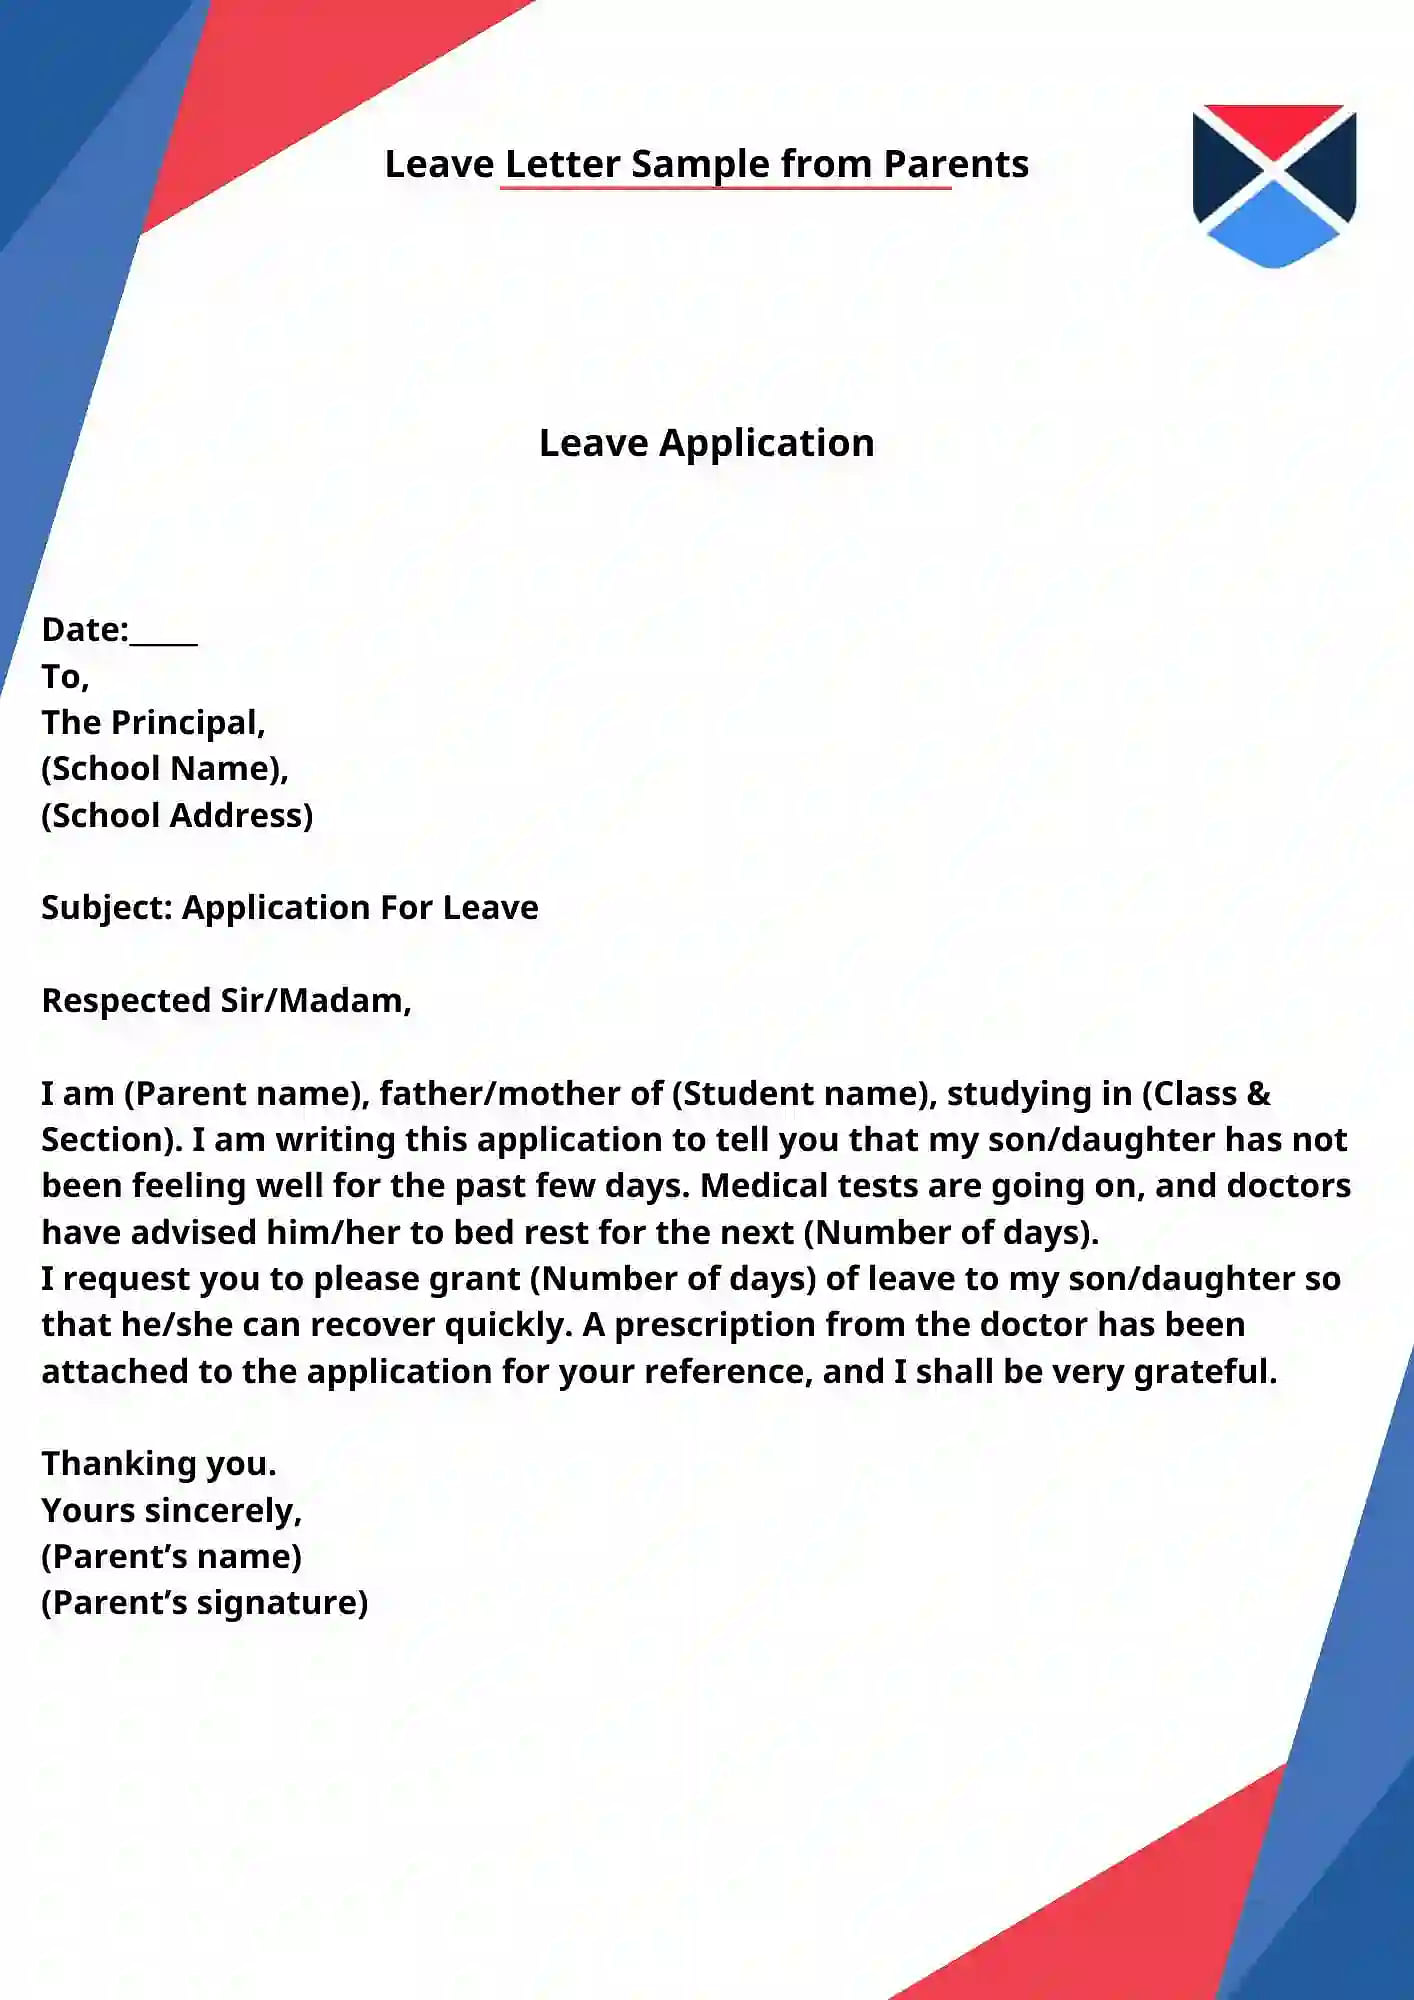 sample of leave application letter for school